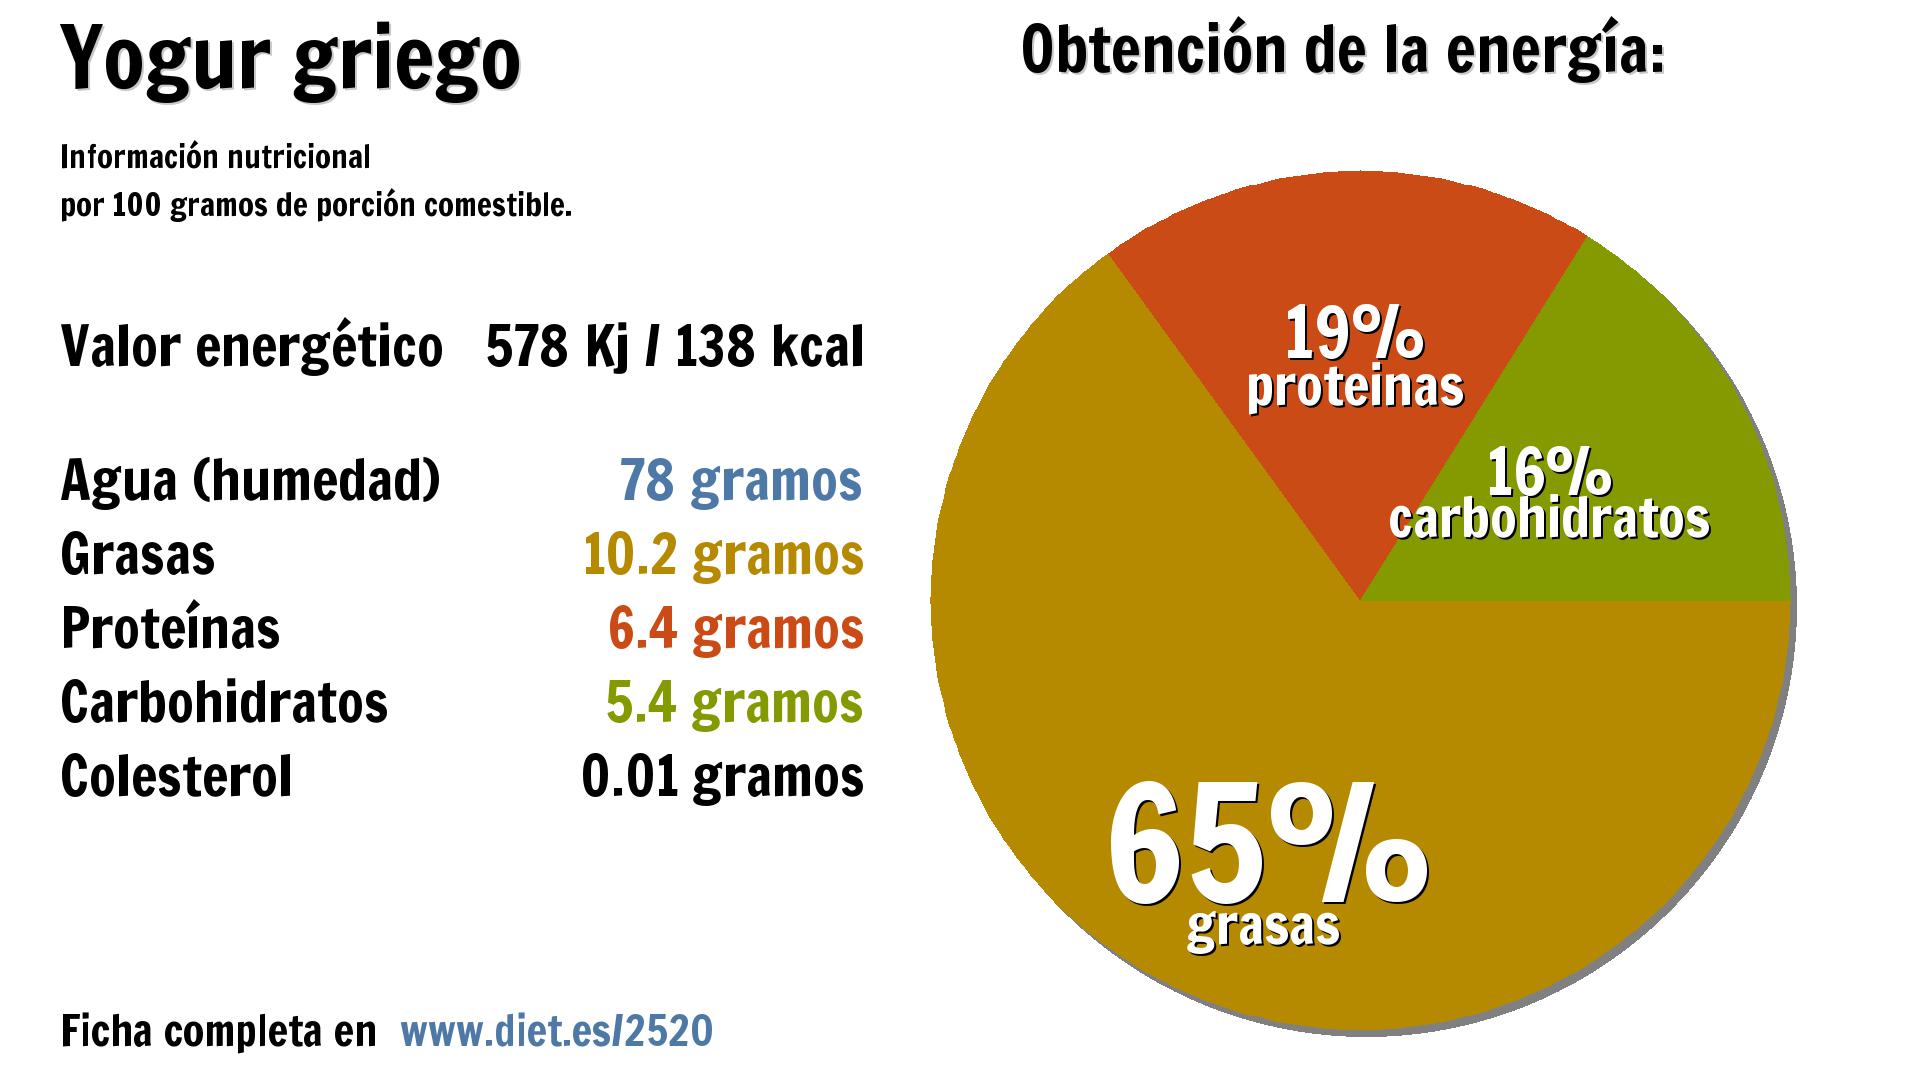 Yogur griego: energía 578 Kj, agua 78 g., grasas 10 g., proteínas 6 g. y carbohidratos 5 g.